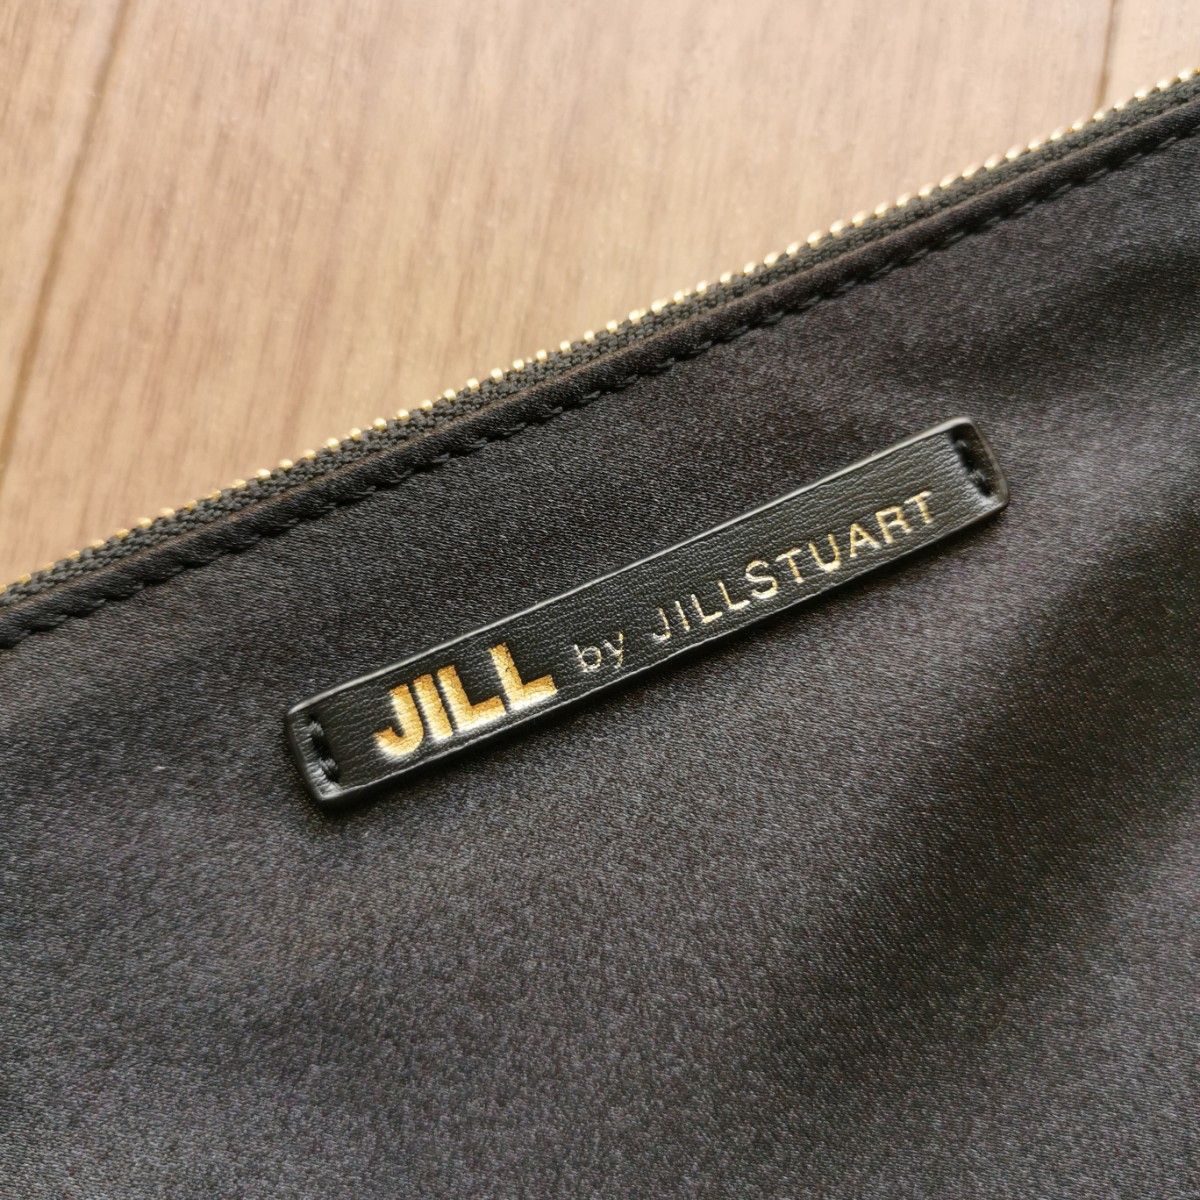 JILL by jillstuart ジルバイジルスチュアート ポーチ ブレスレット セット 小物入れ 化粧ポーチ ミニポーチ 